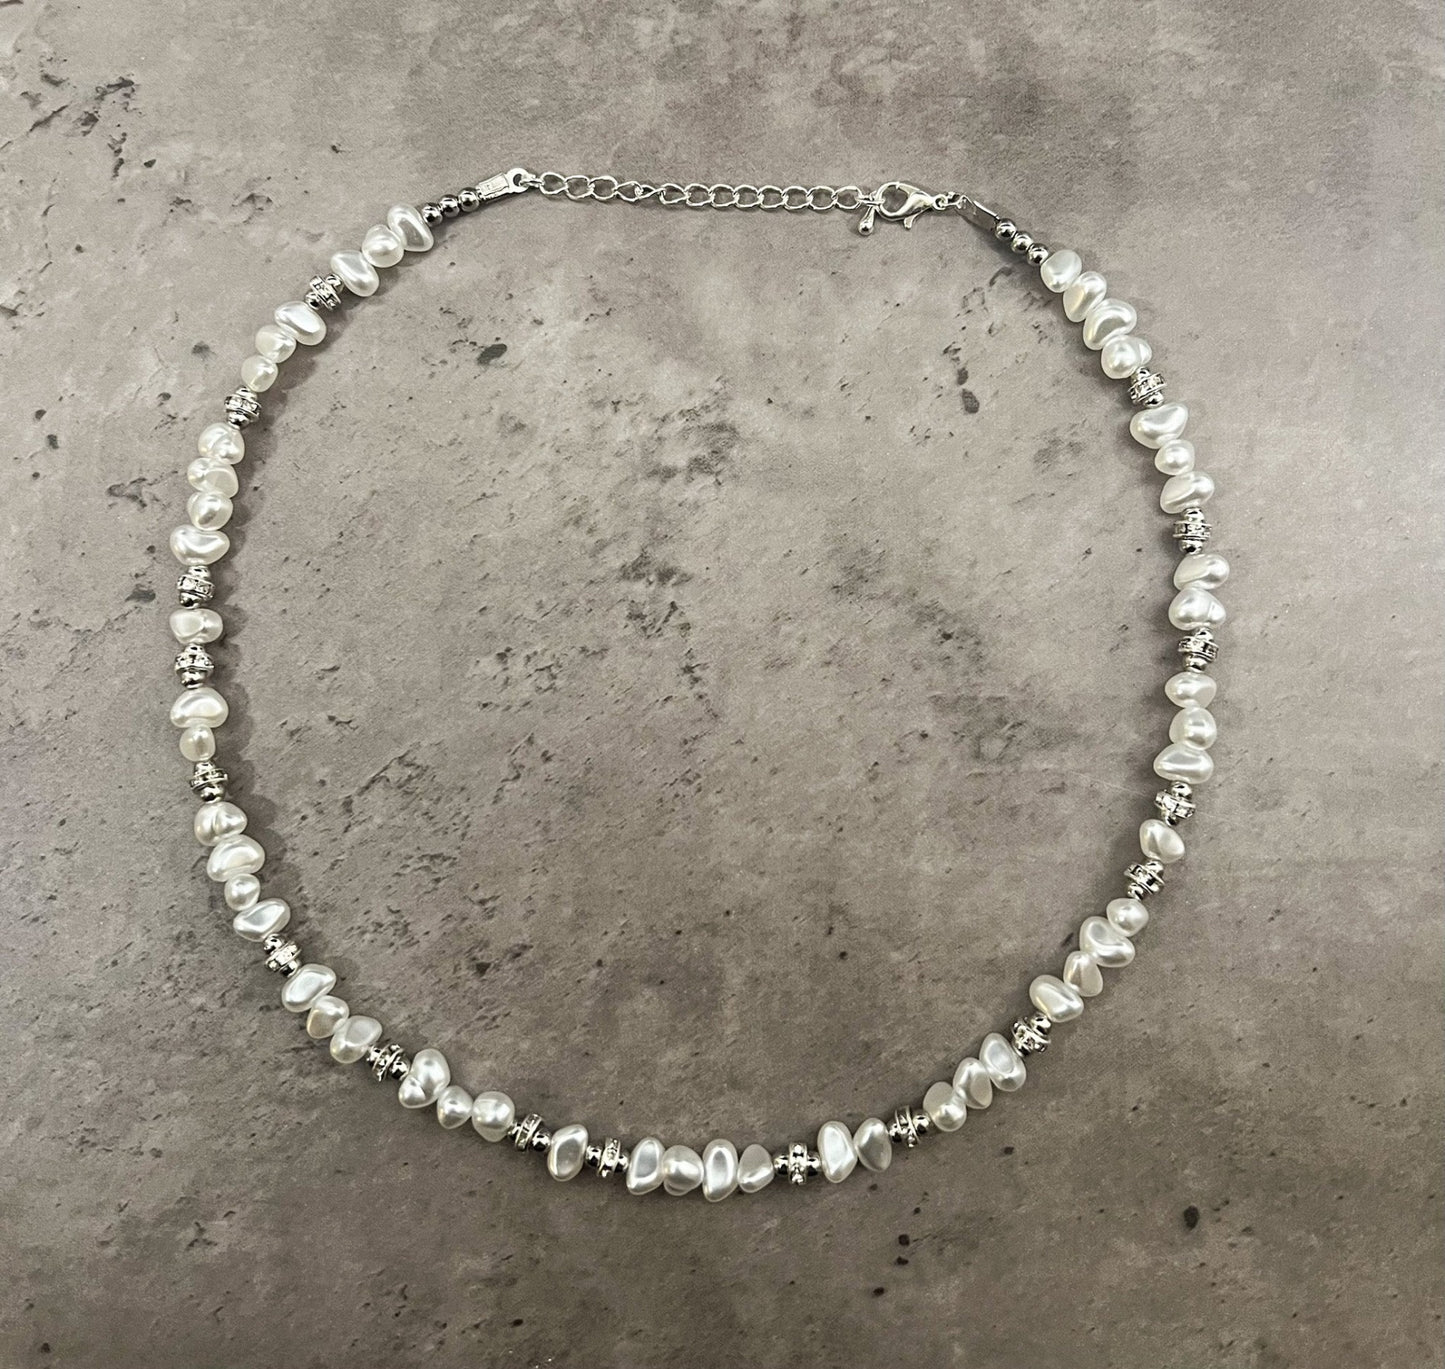 Rhinestone Necklace